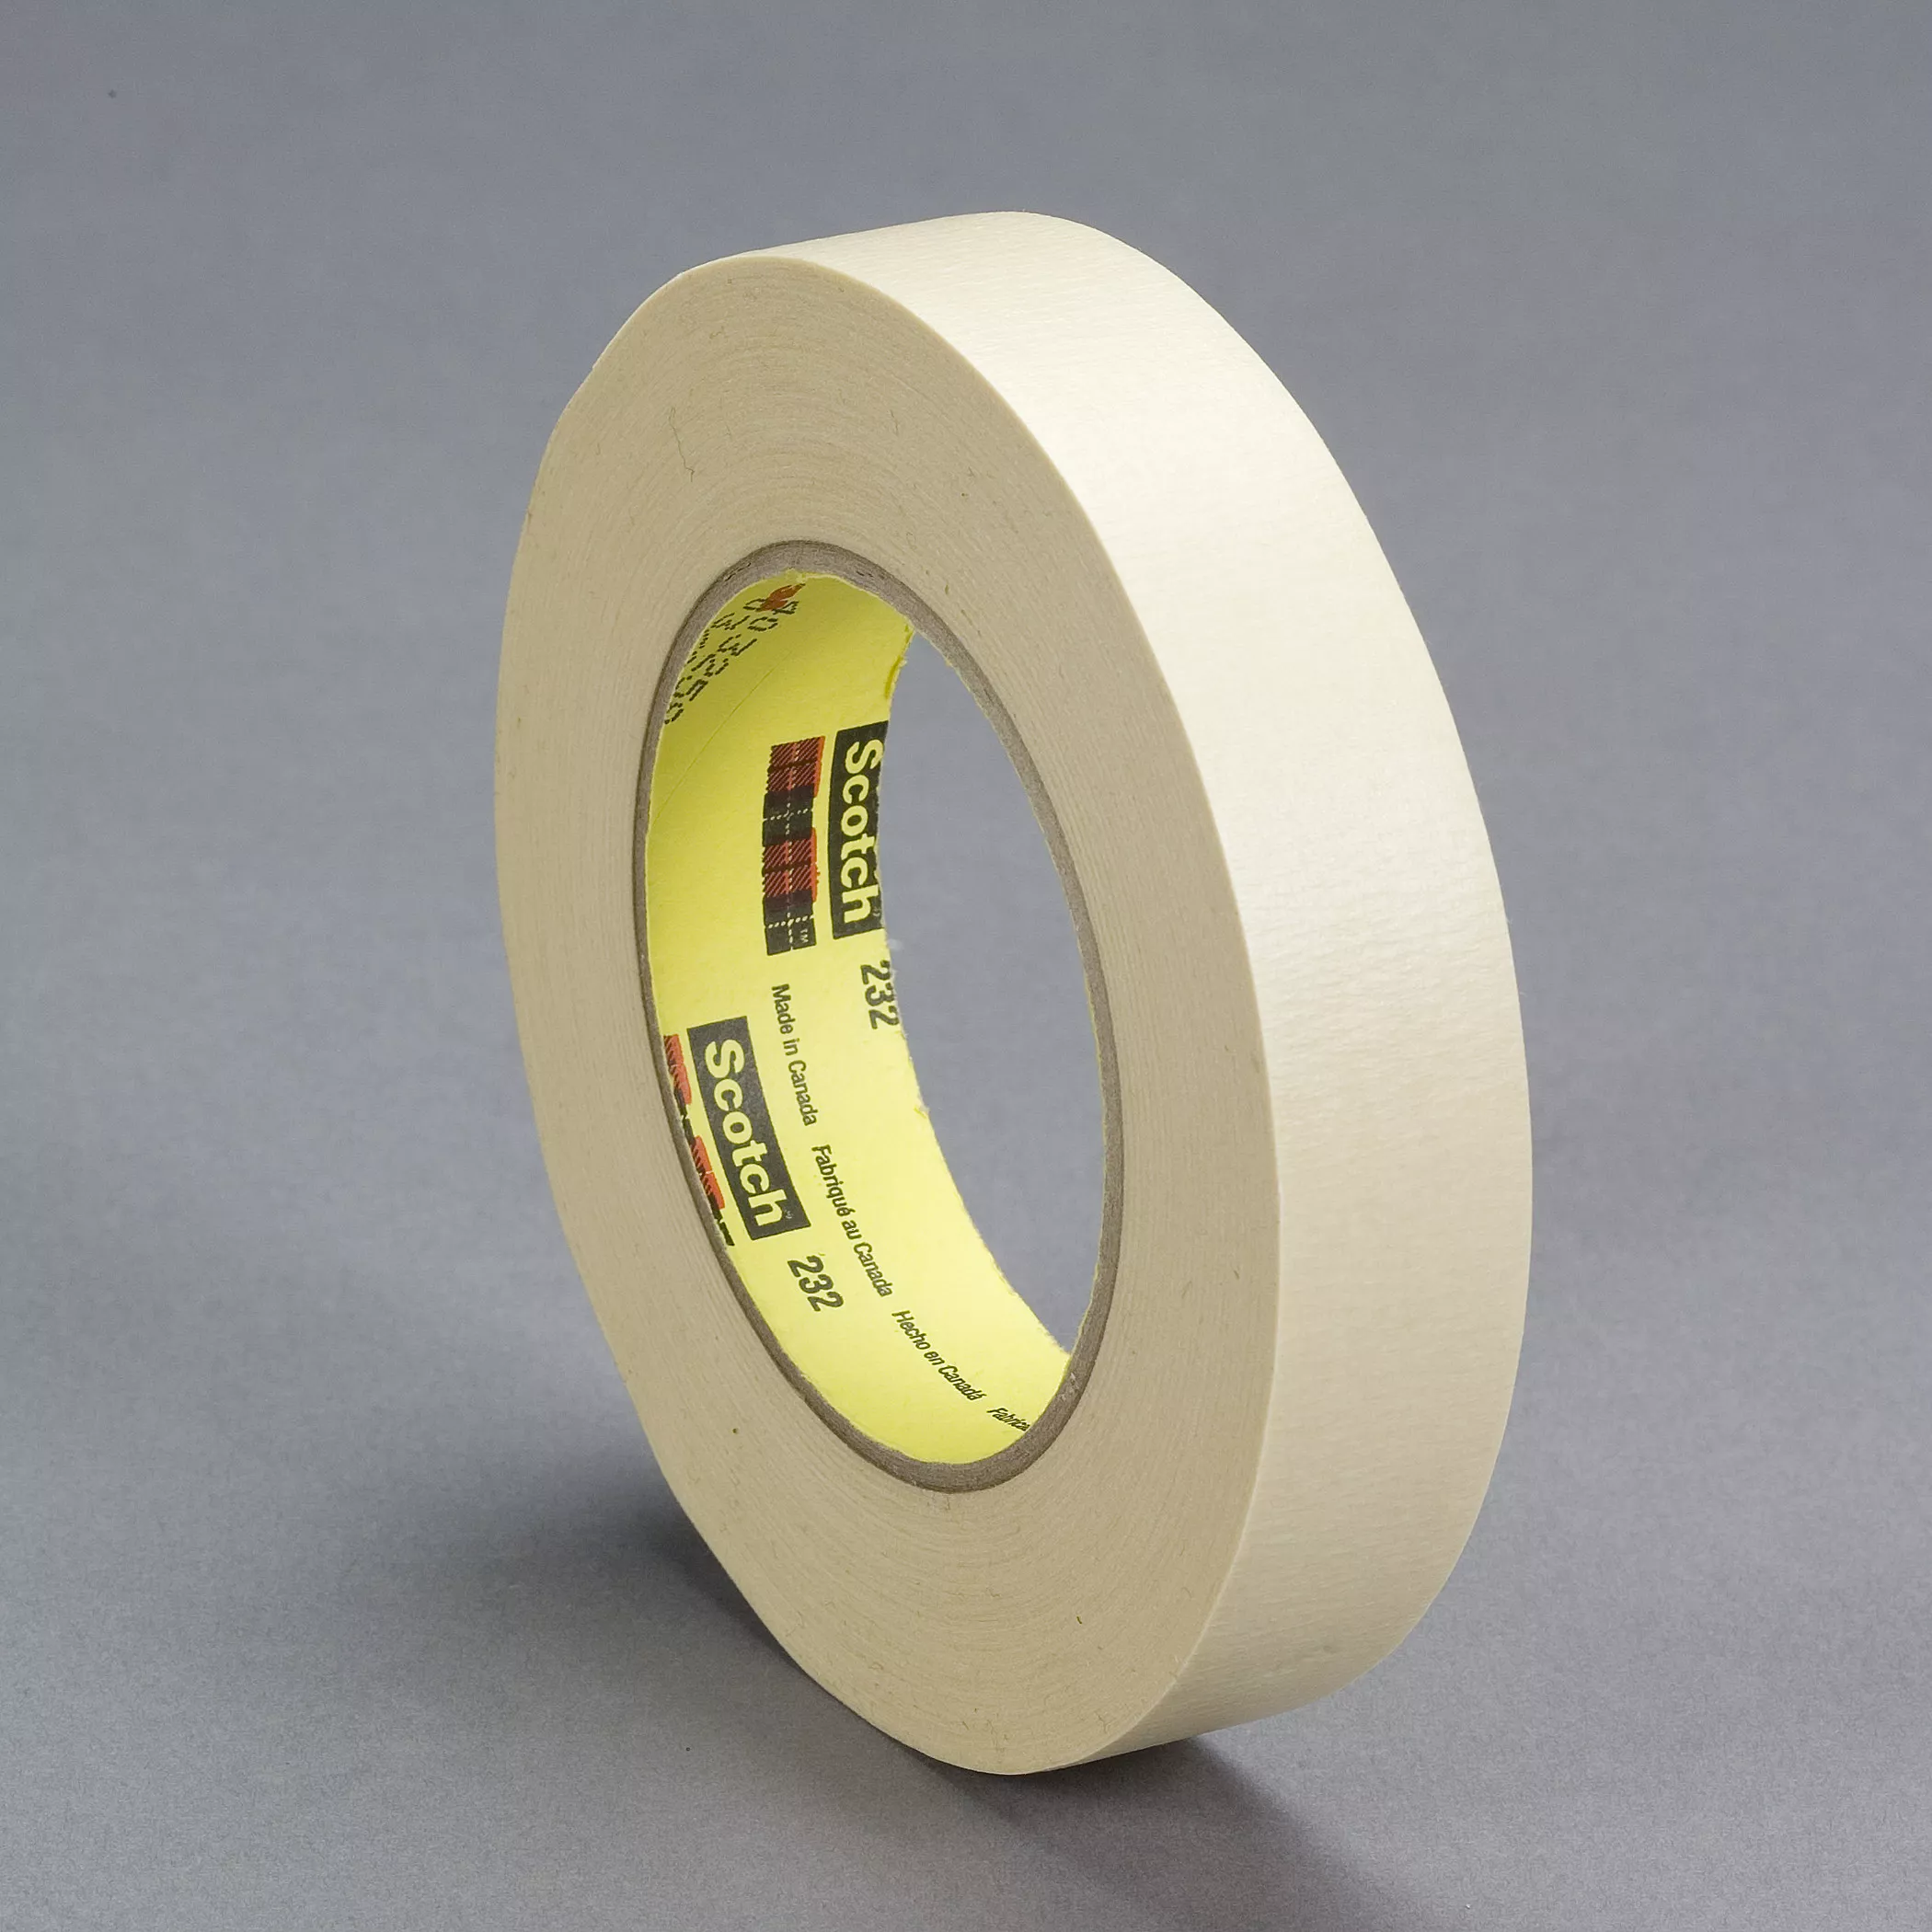 3M™ High Performance Masking Tape 232, Tan, 1 in x 60 yd, 6.3 mil,
36/Case